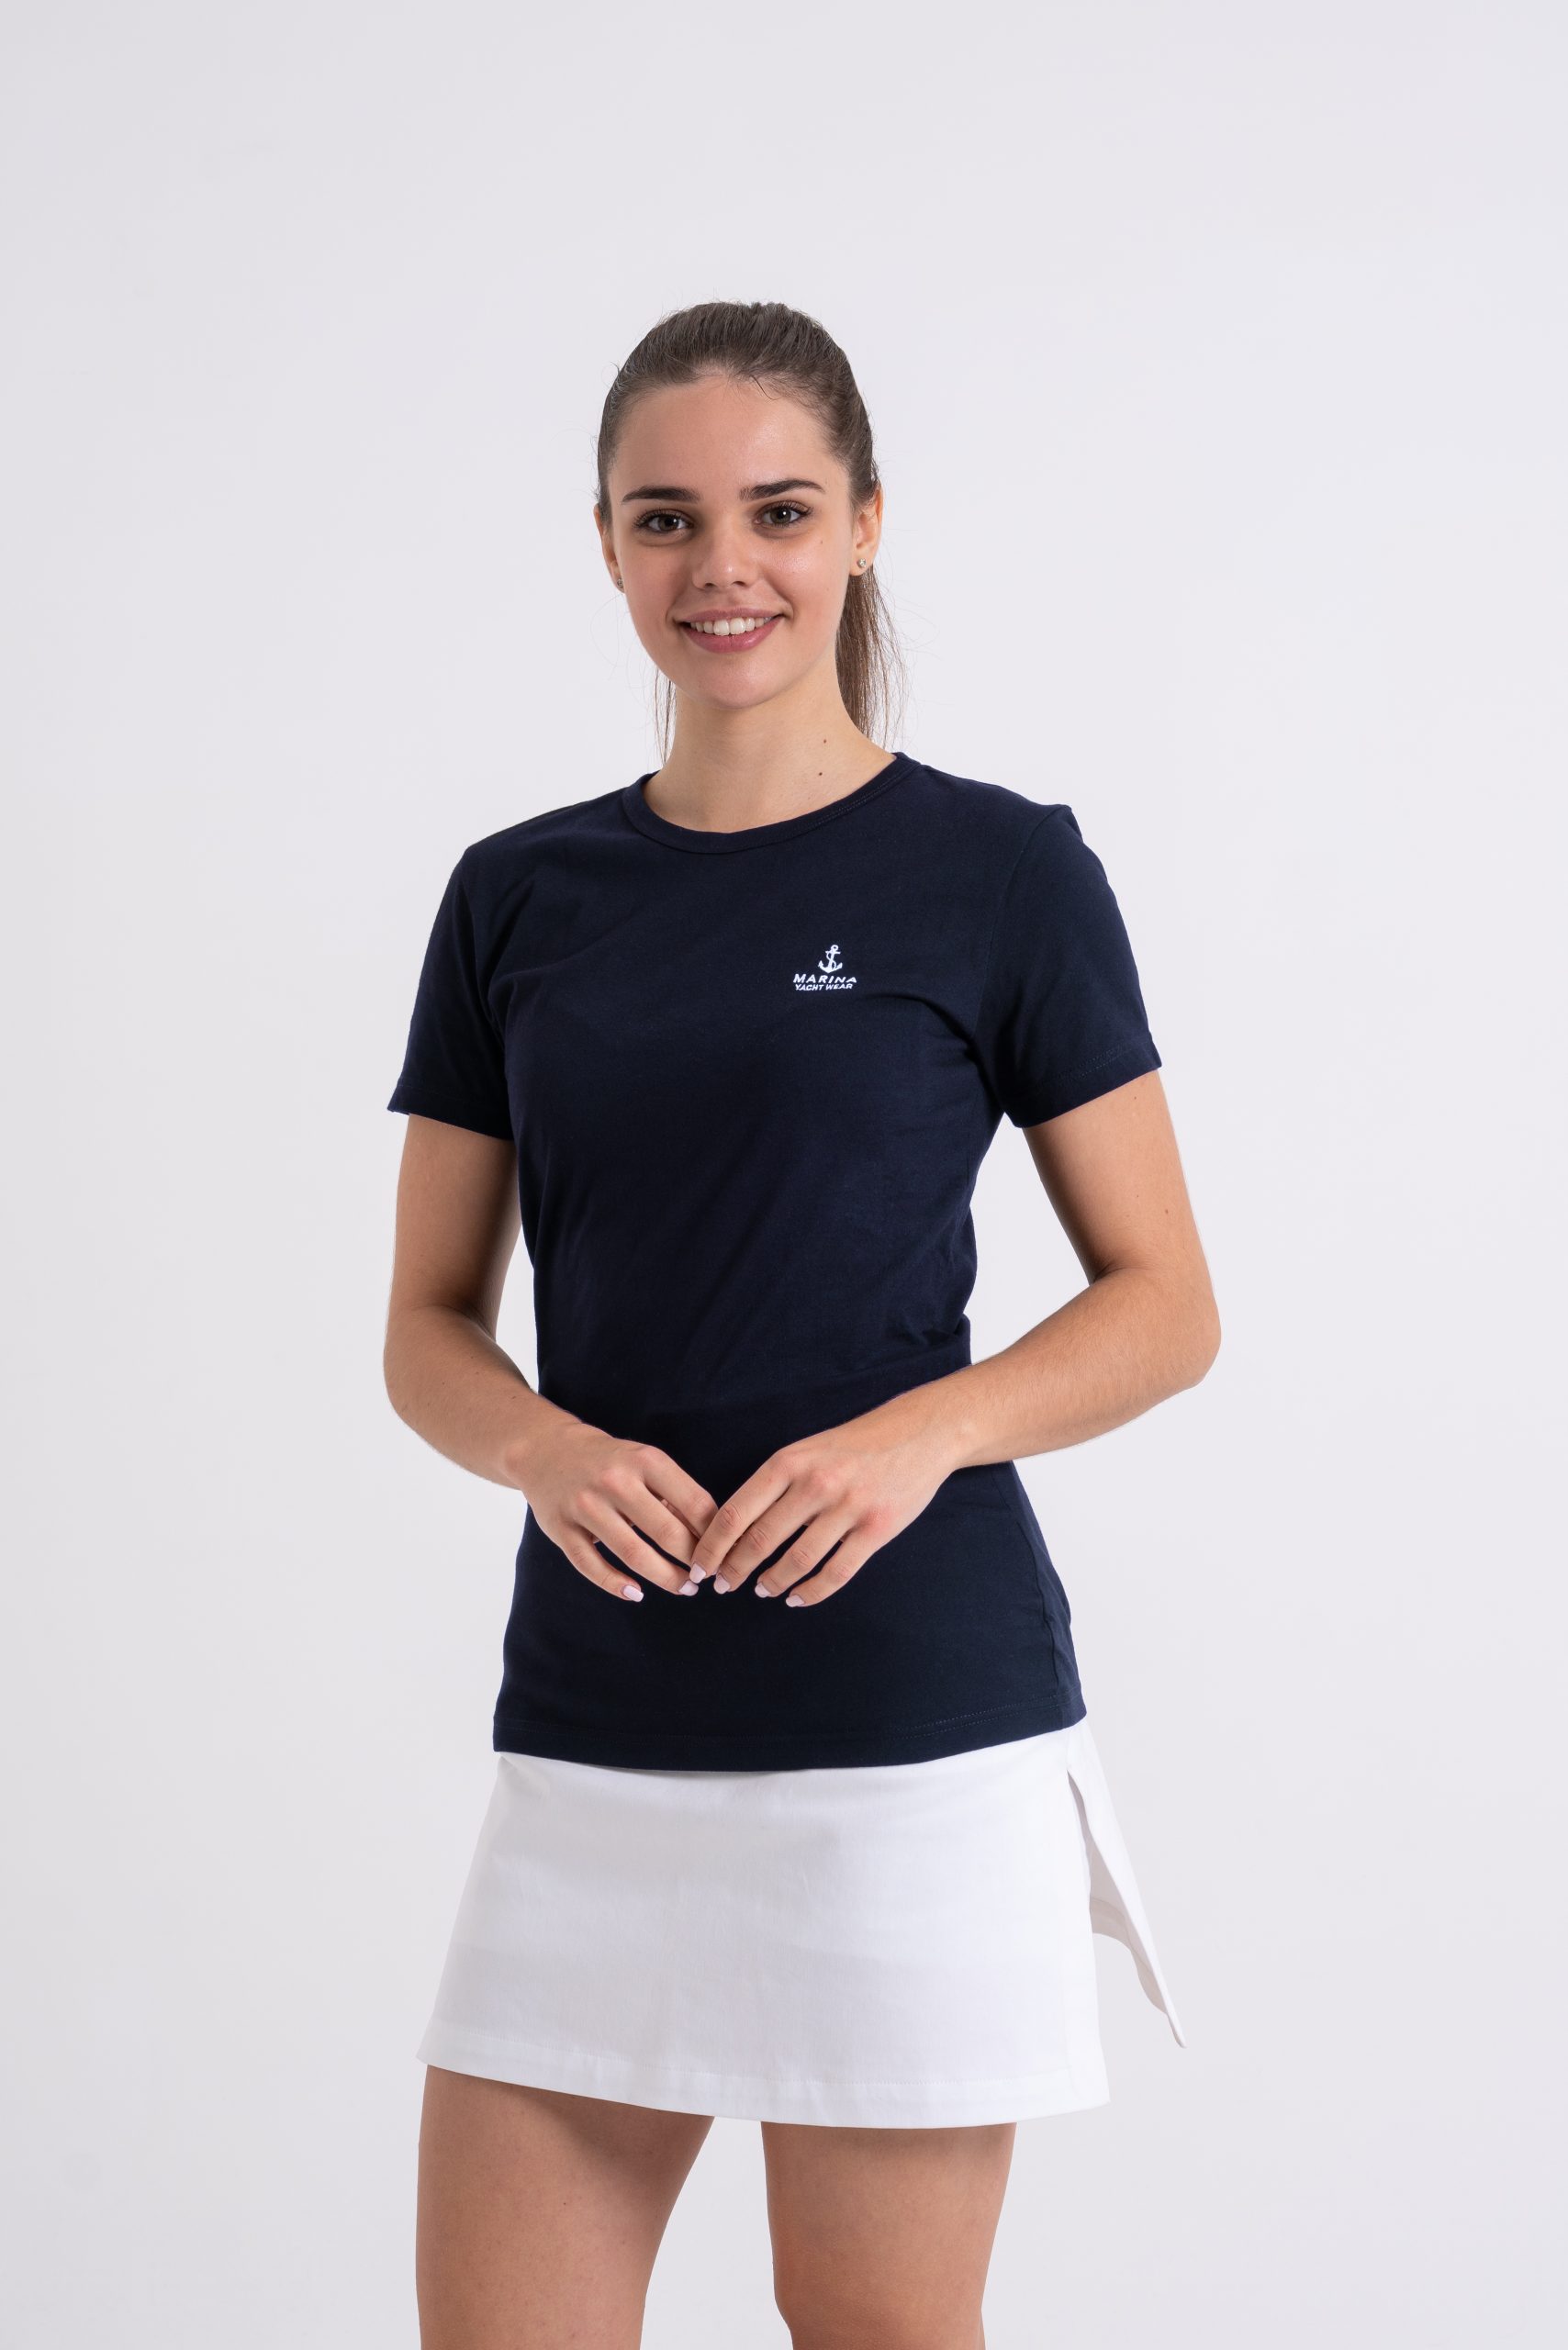 Ladies t-shirt short sleeve Navy by Marina Yacht Wear